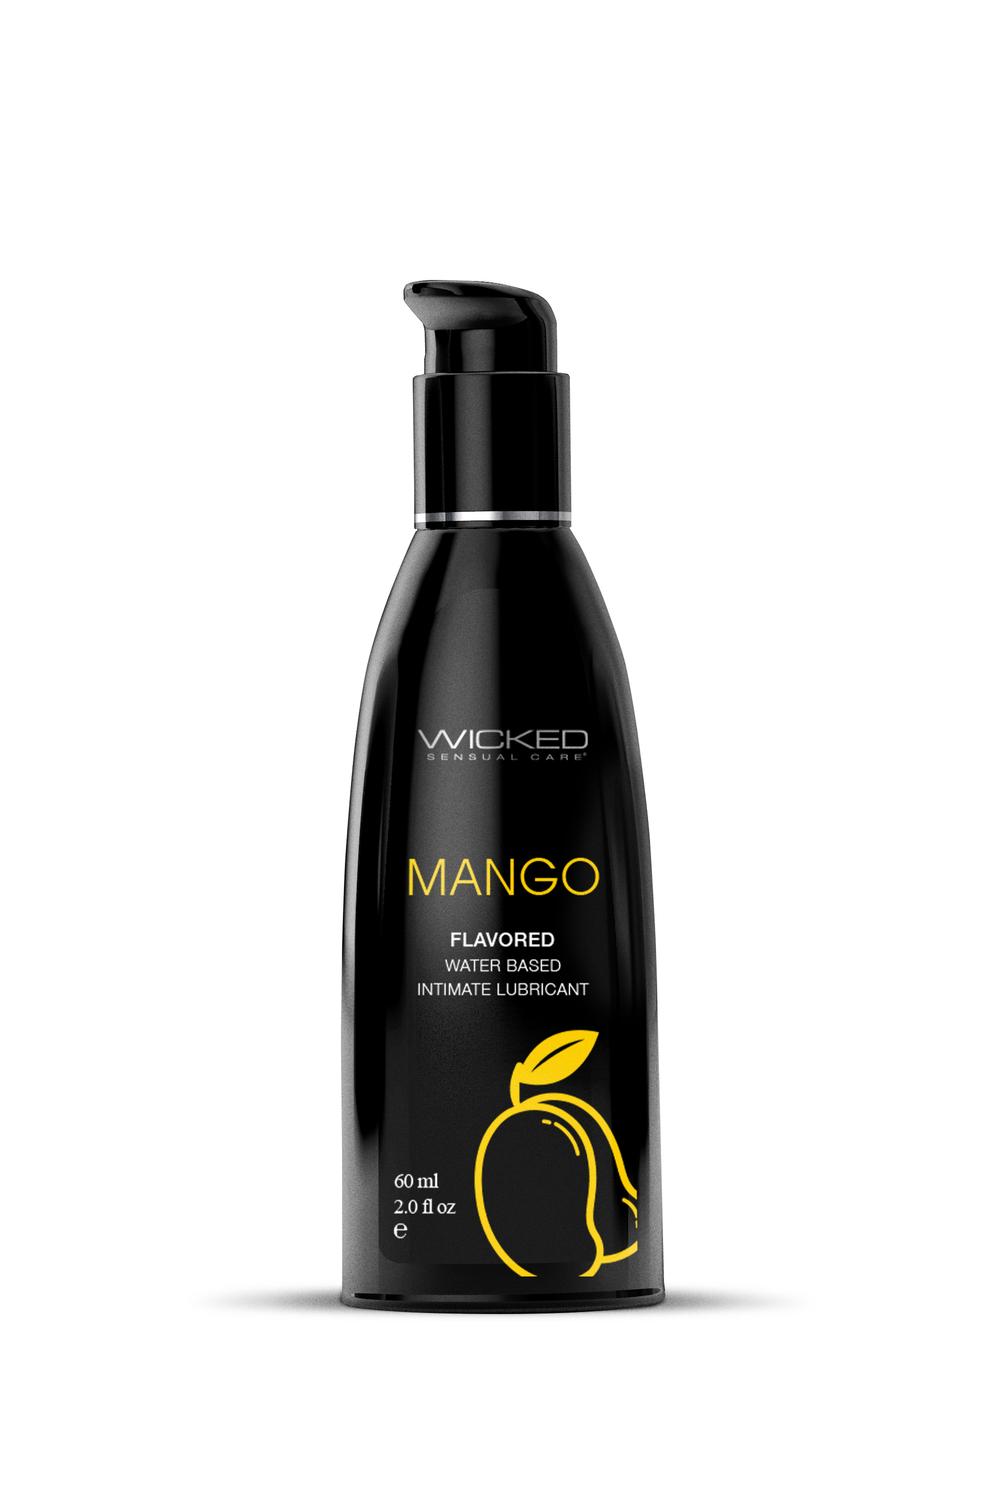 WICKED Aqua lubrikační gel Mango 60 ml Wicked Sensual Care